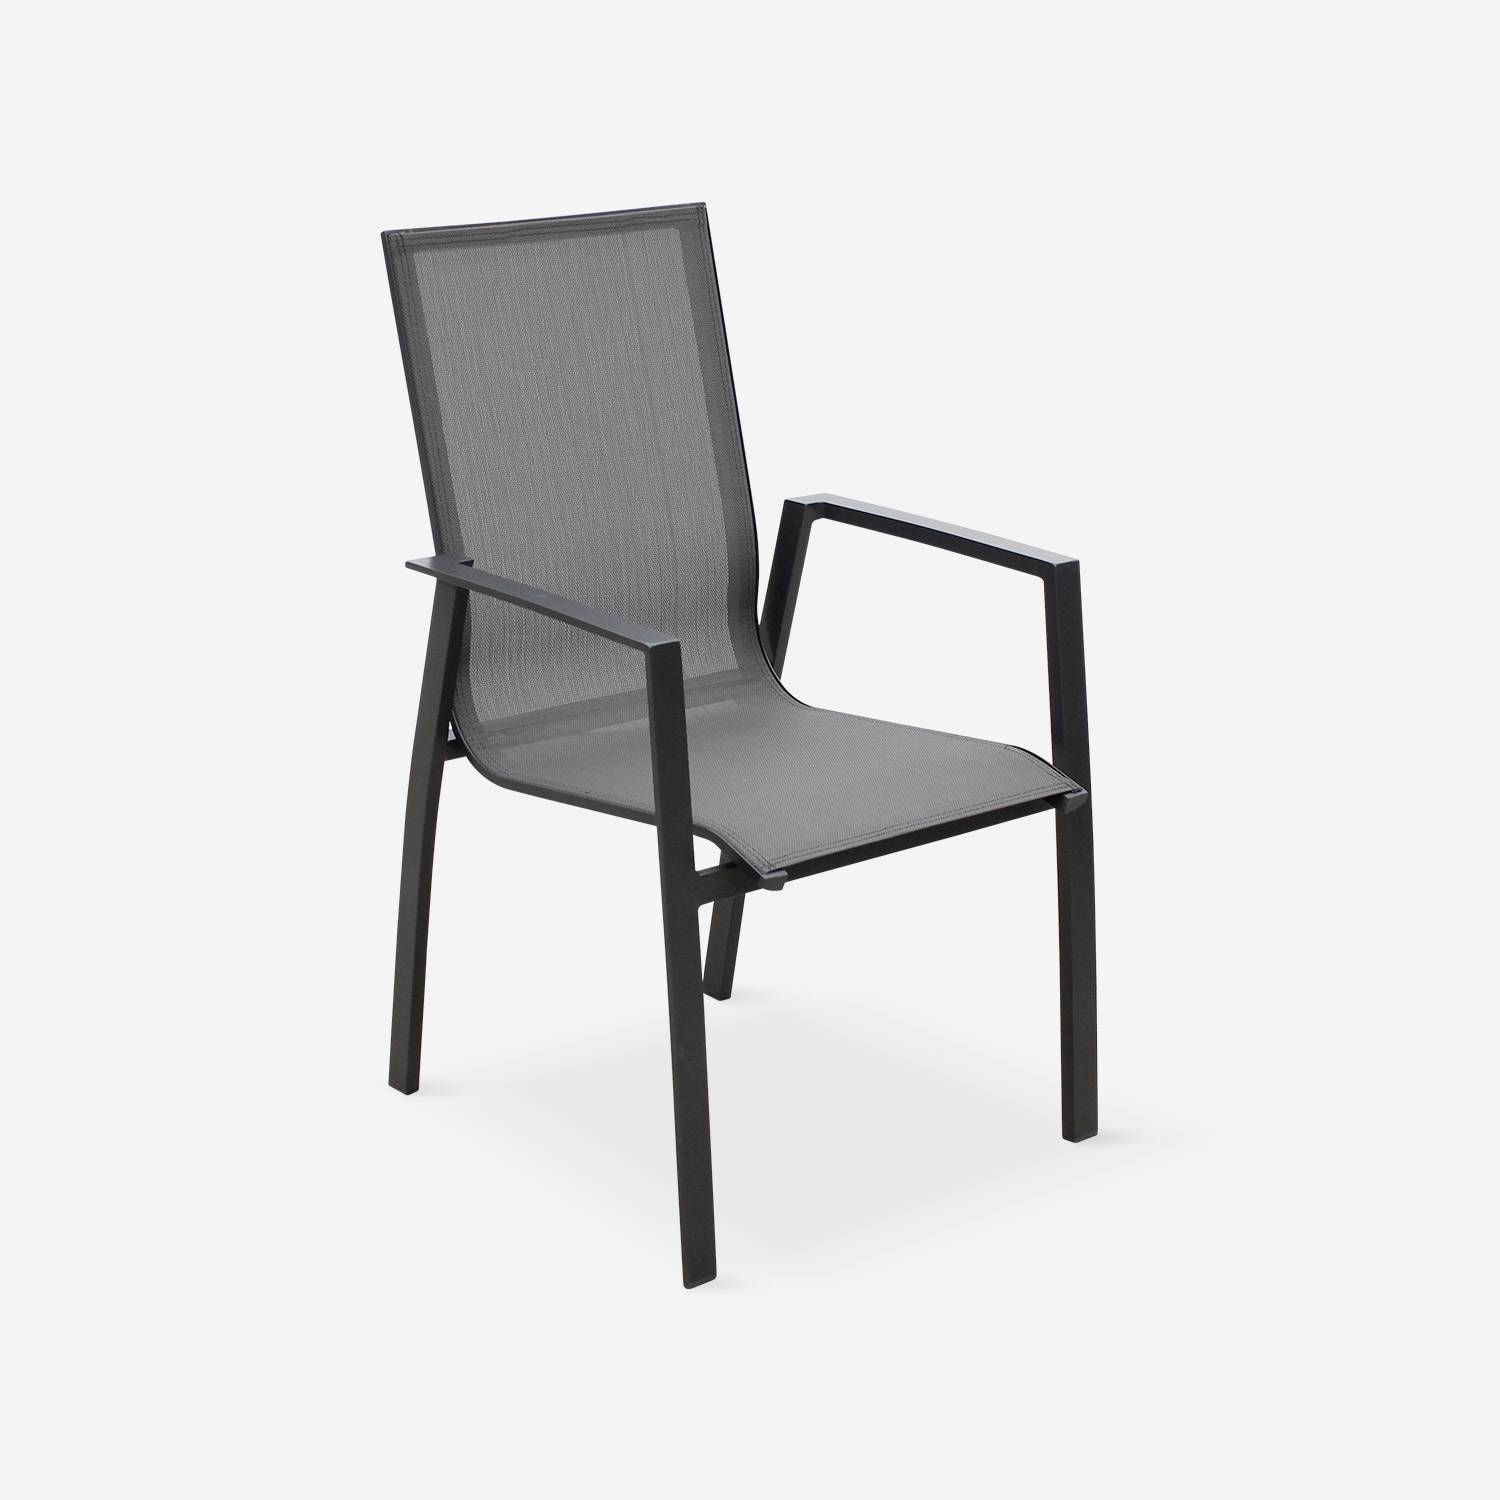 Juego de 2 sillas - Washington - Aluminio antracita y textileno gris oscuro, apilables Photo2